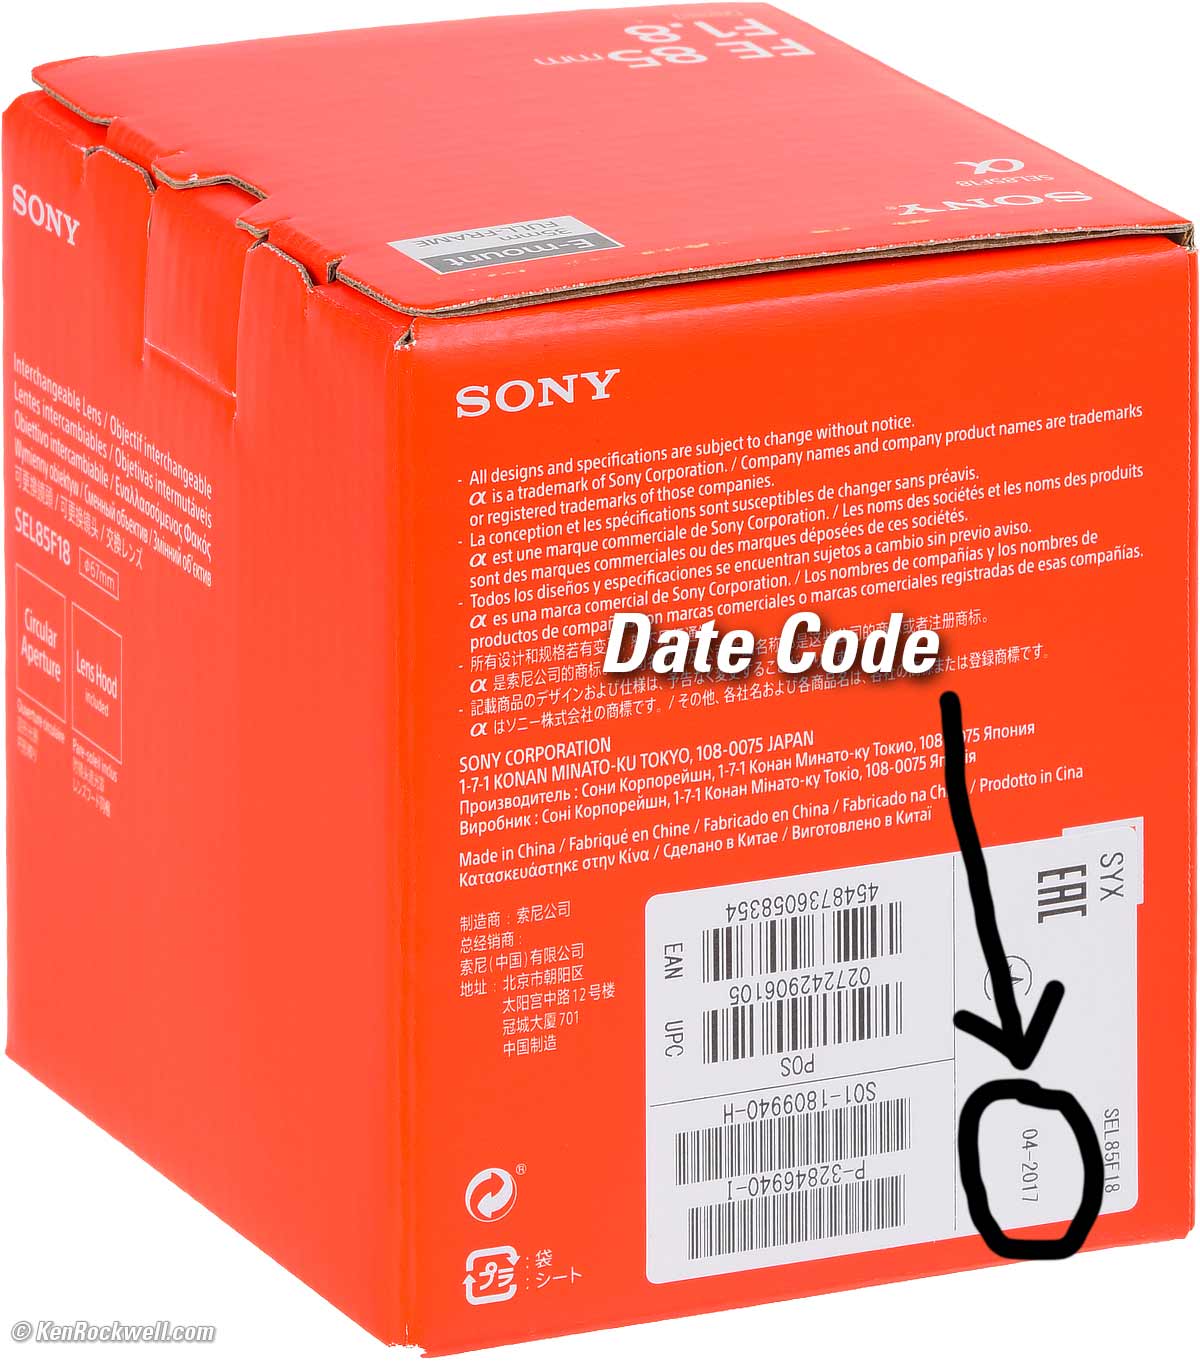 Sony Lens Serial Number softisdeals